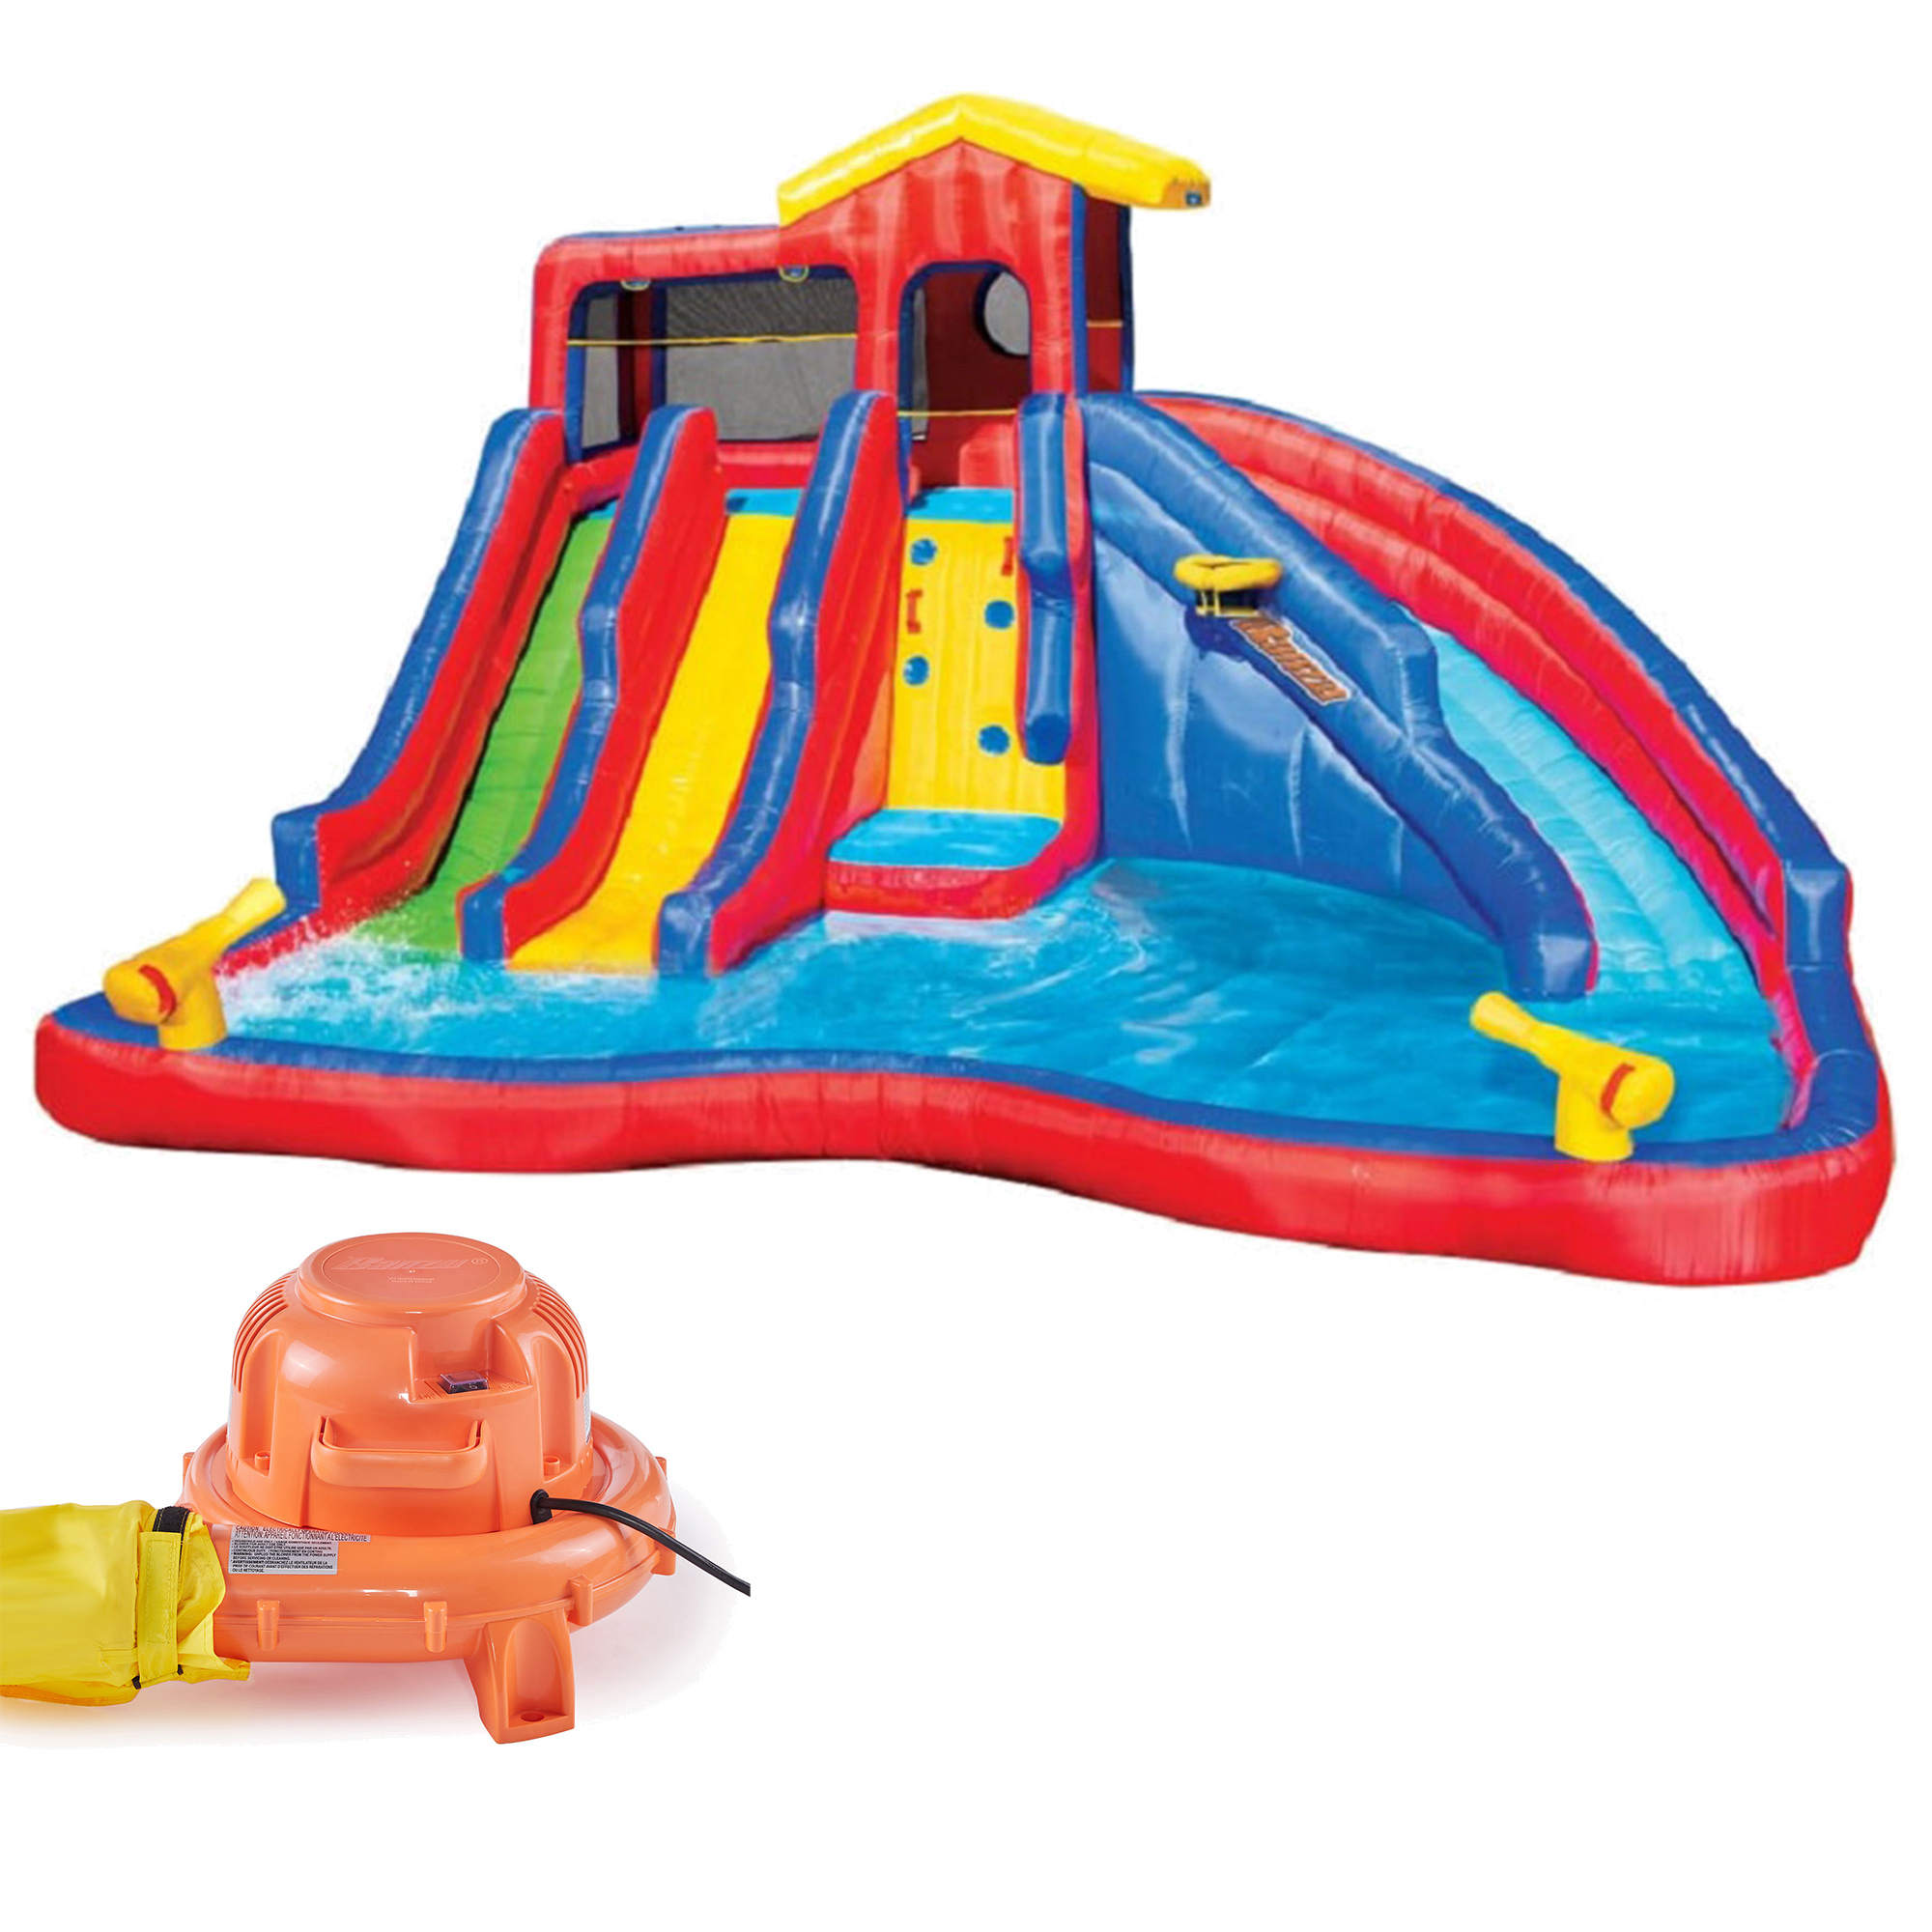 Banzai Hydro Blast Kids Inflatable Backyard Waterpark Pool Play Center - image 1 of 10